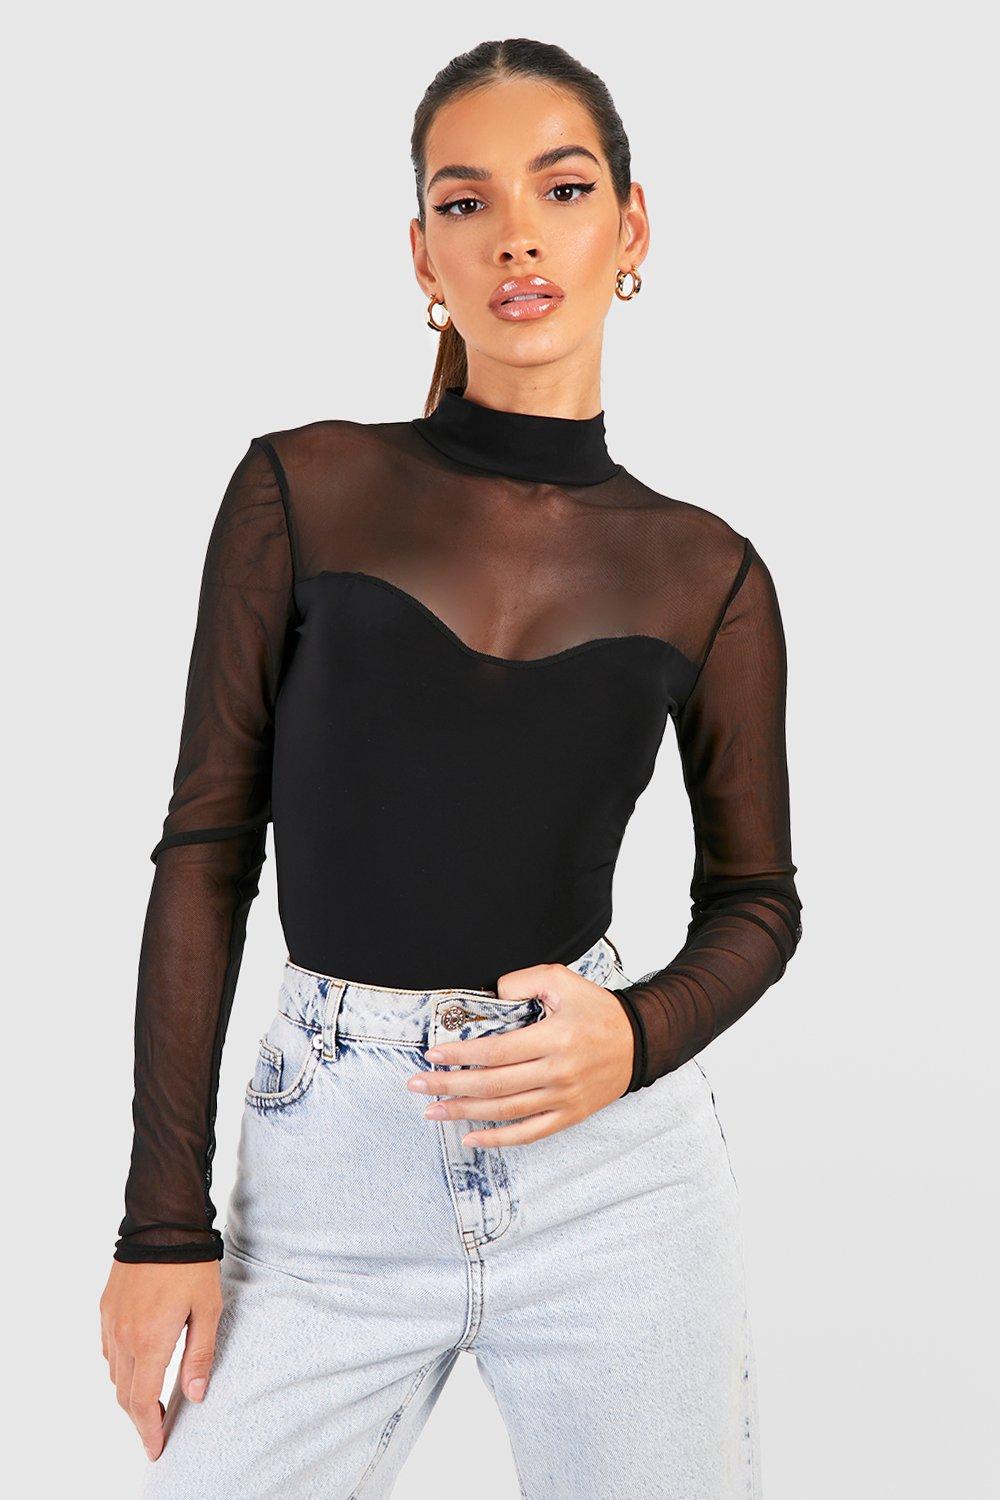 https://media.boohoo.com/i/boohoo/dzz59382_black_xl/female-black-mesh-bralette-bodysuit